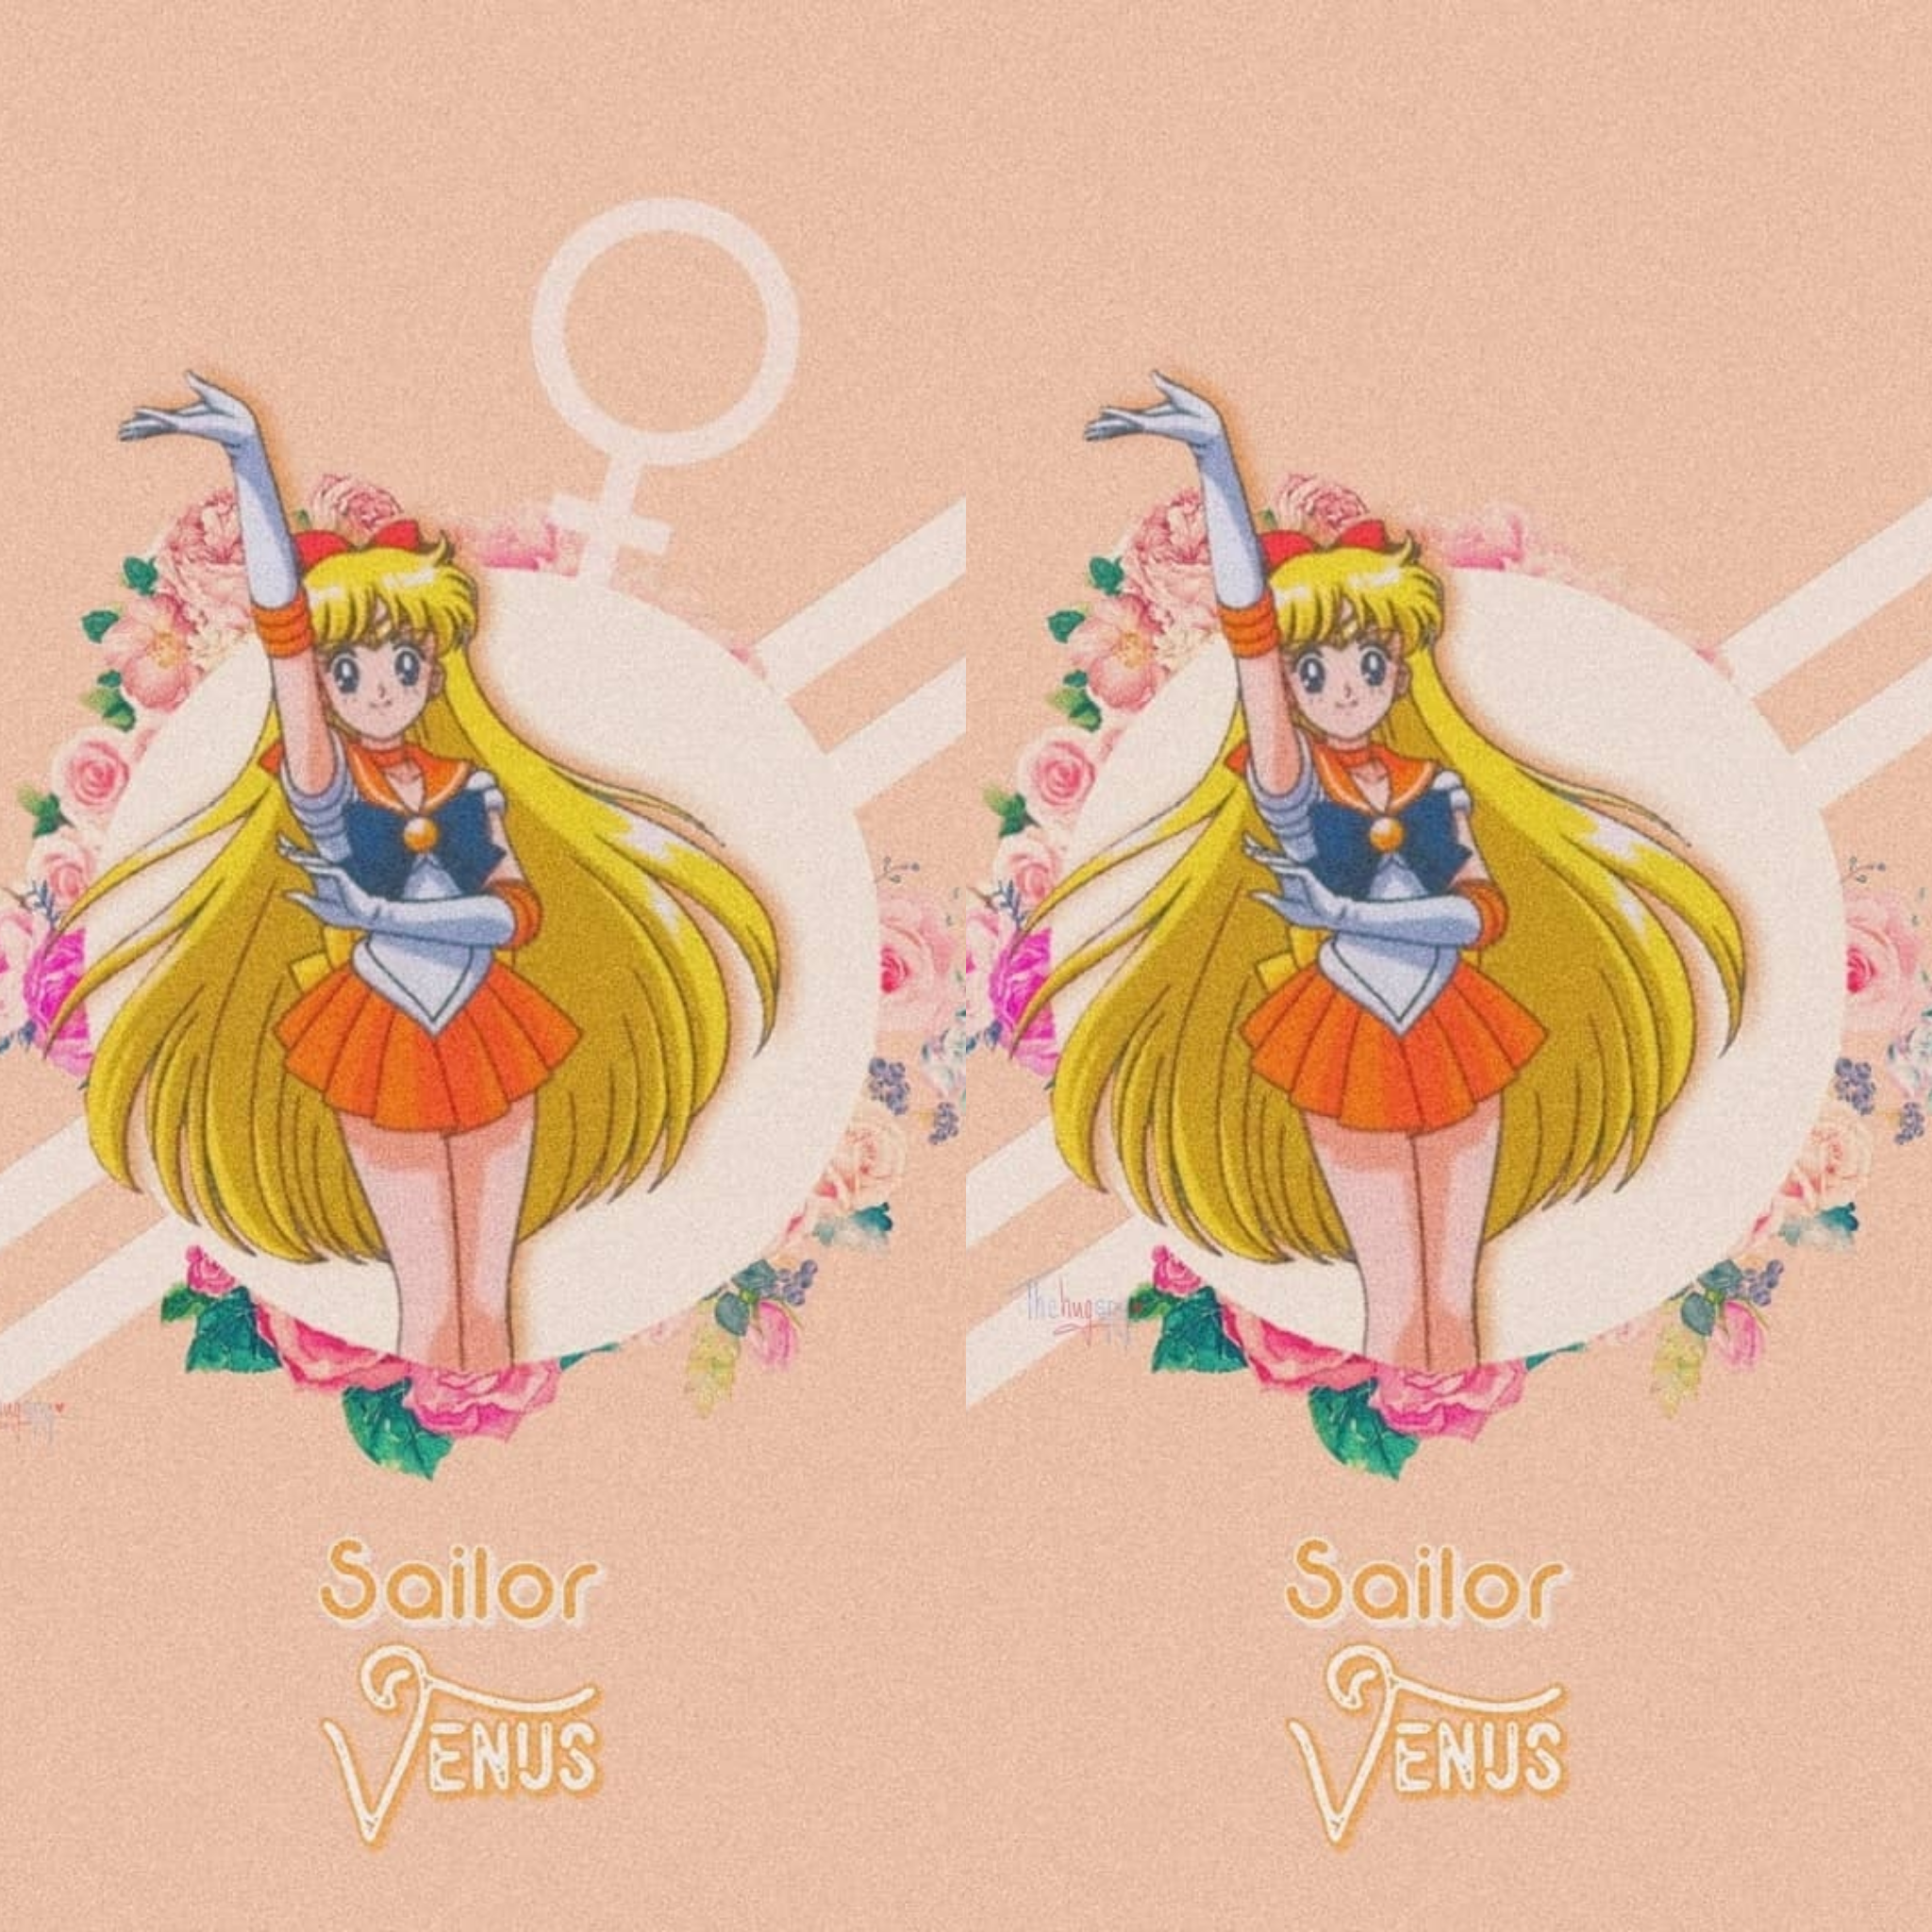 Sailor Venus Wallpaper Made 19 06 2018 Sailorvenus Ven